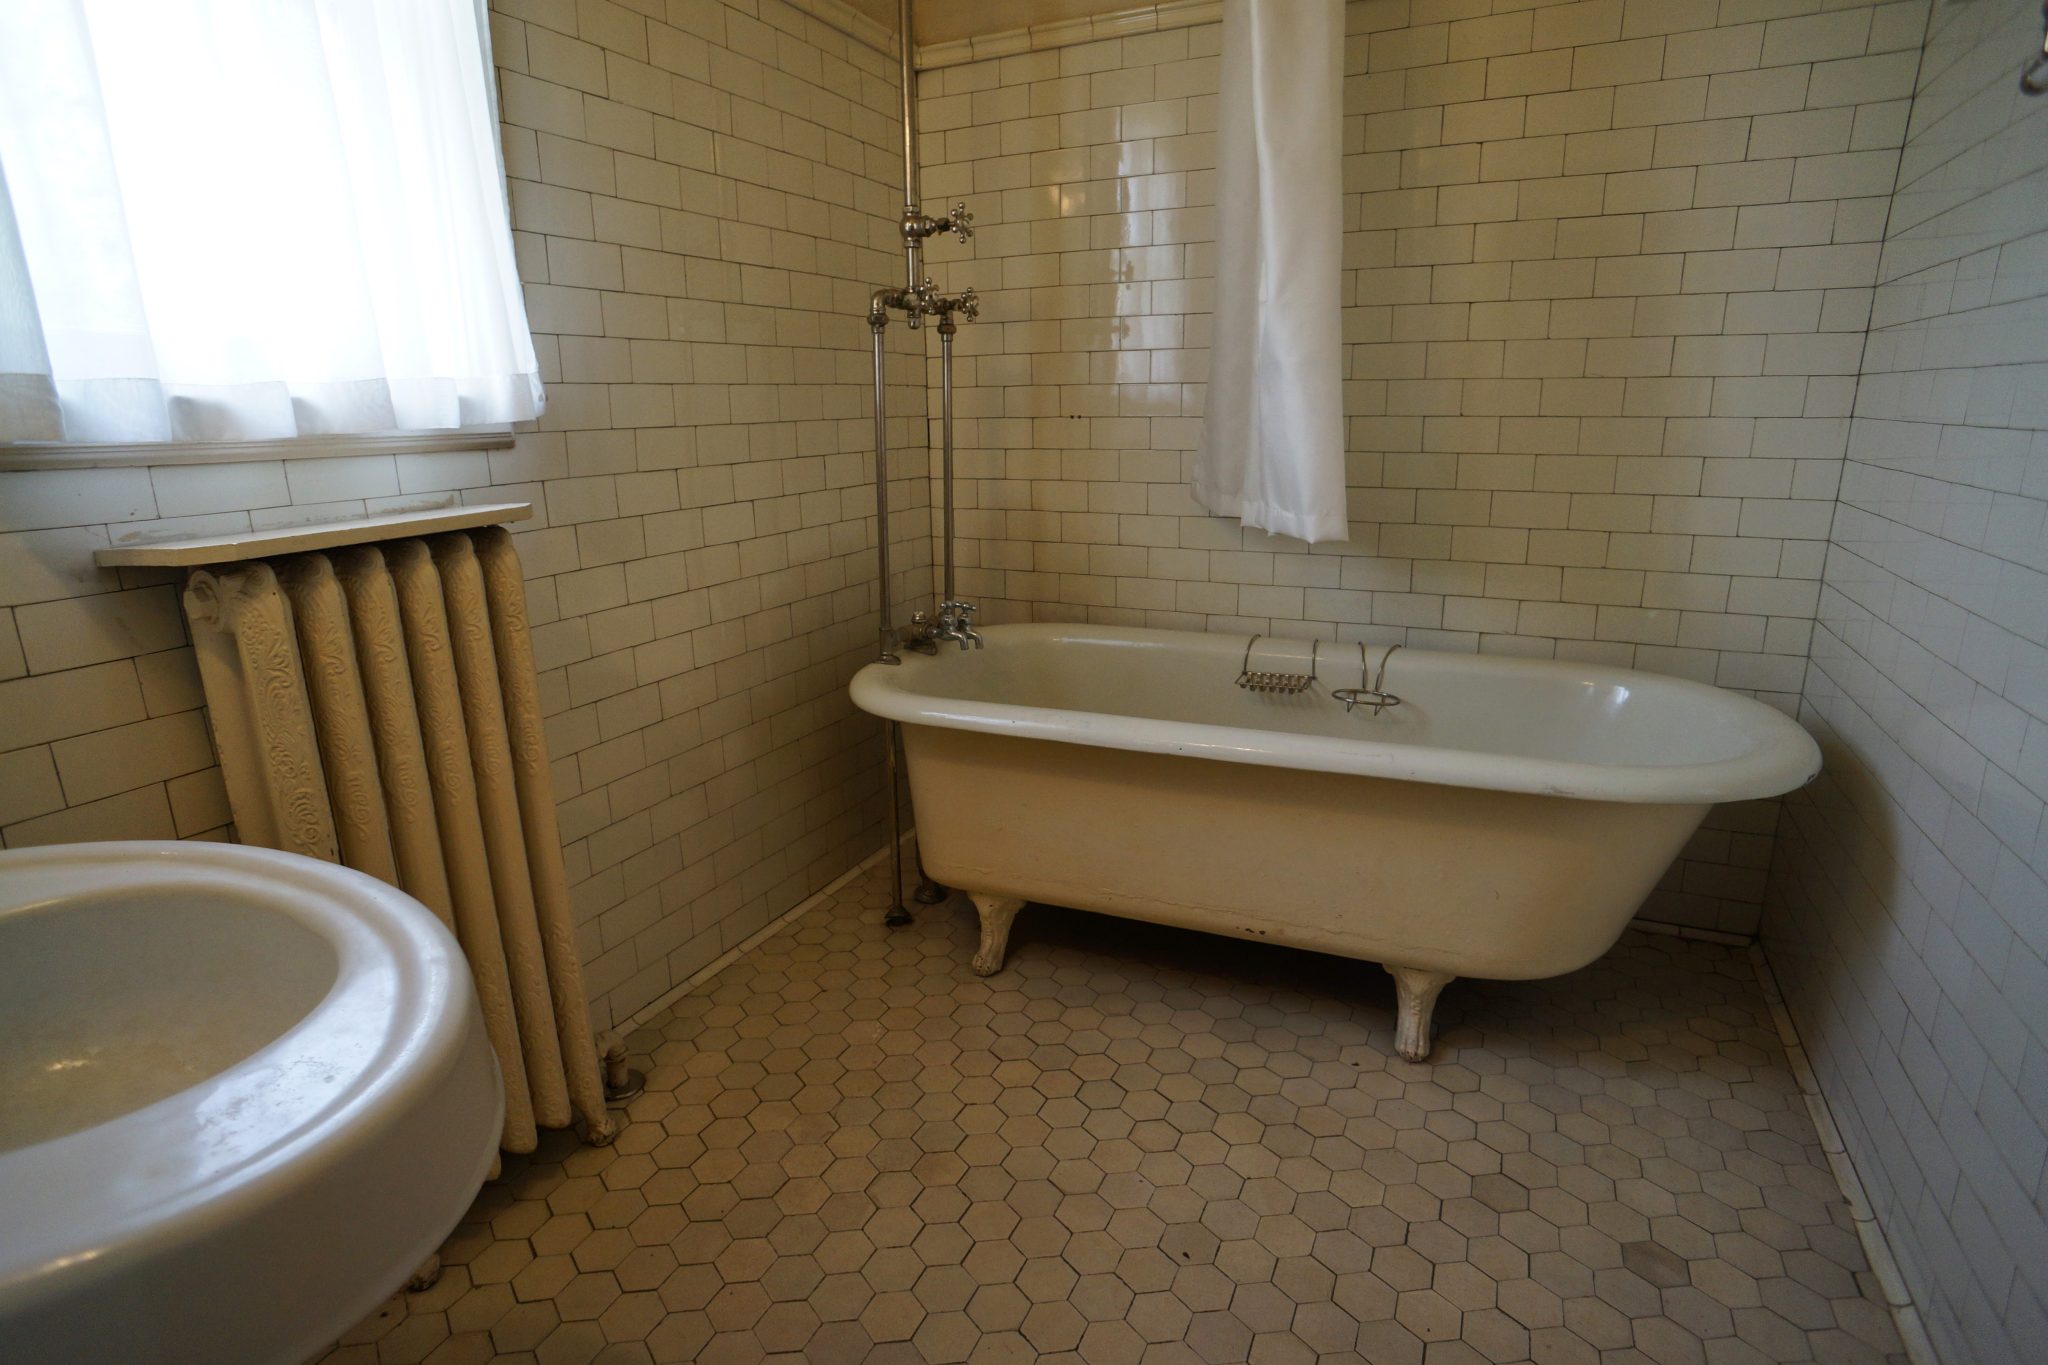 Bathtub in Tiled Bathroom at the Historic O'Keefe Ranch near Vernon, British Columbia, Canada